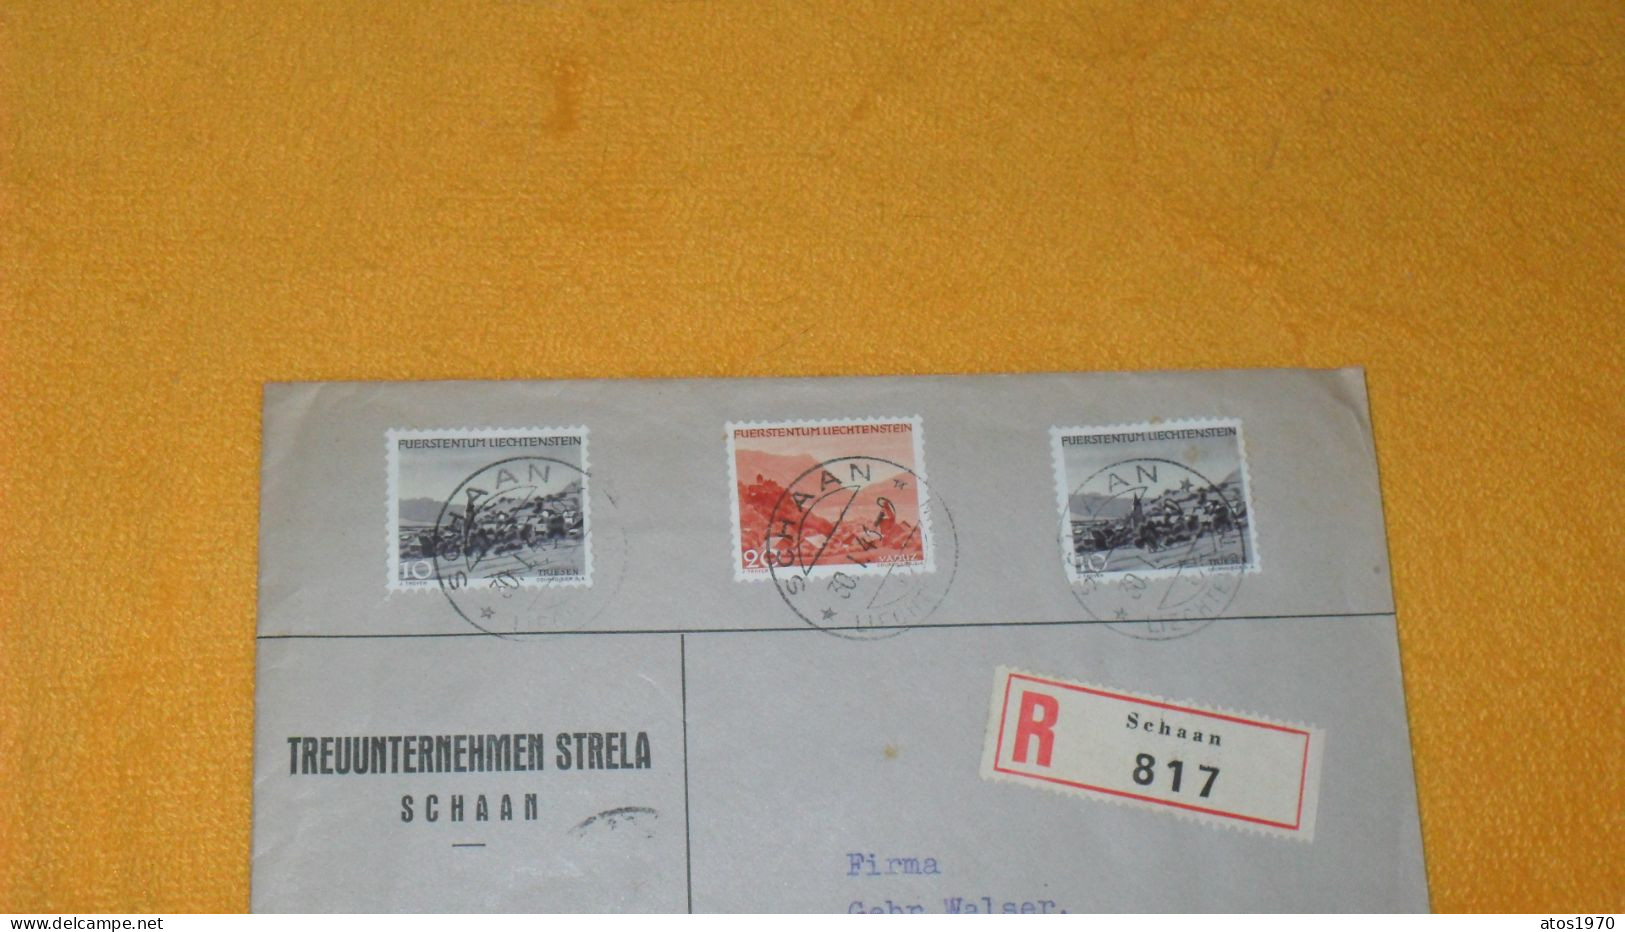 ENVELOPPE ANCIENNE DE 1946../ TREUUNTERNEHMEN STRELA SCHAAN..R 817 SCHAAN POUR ST. GALLEN BRUGGEN + TIMBRES X3 - Storia Postale